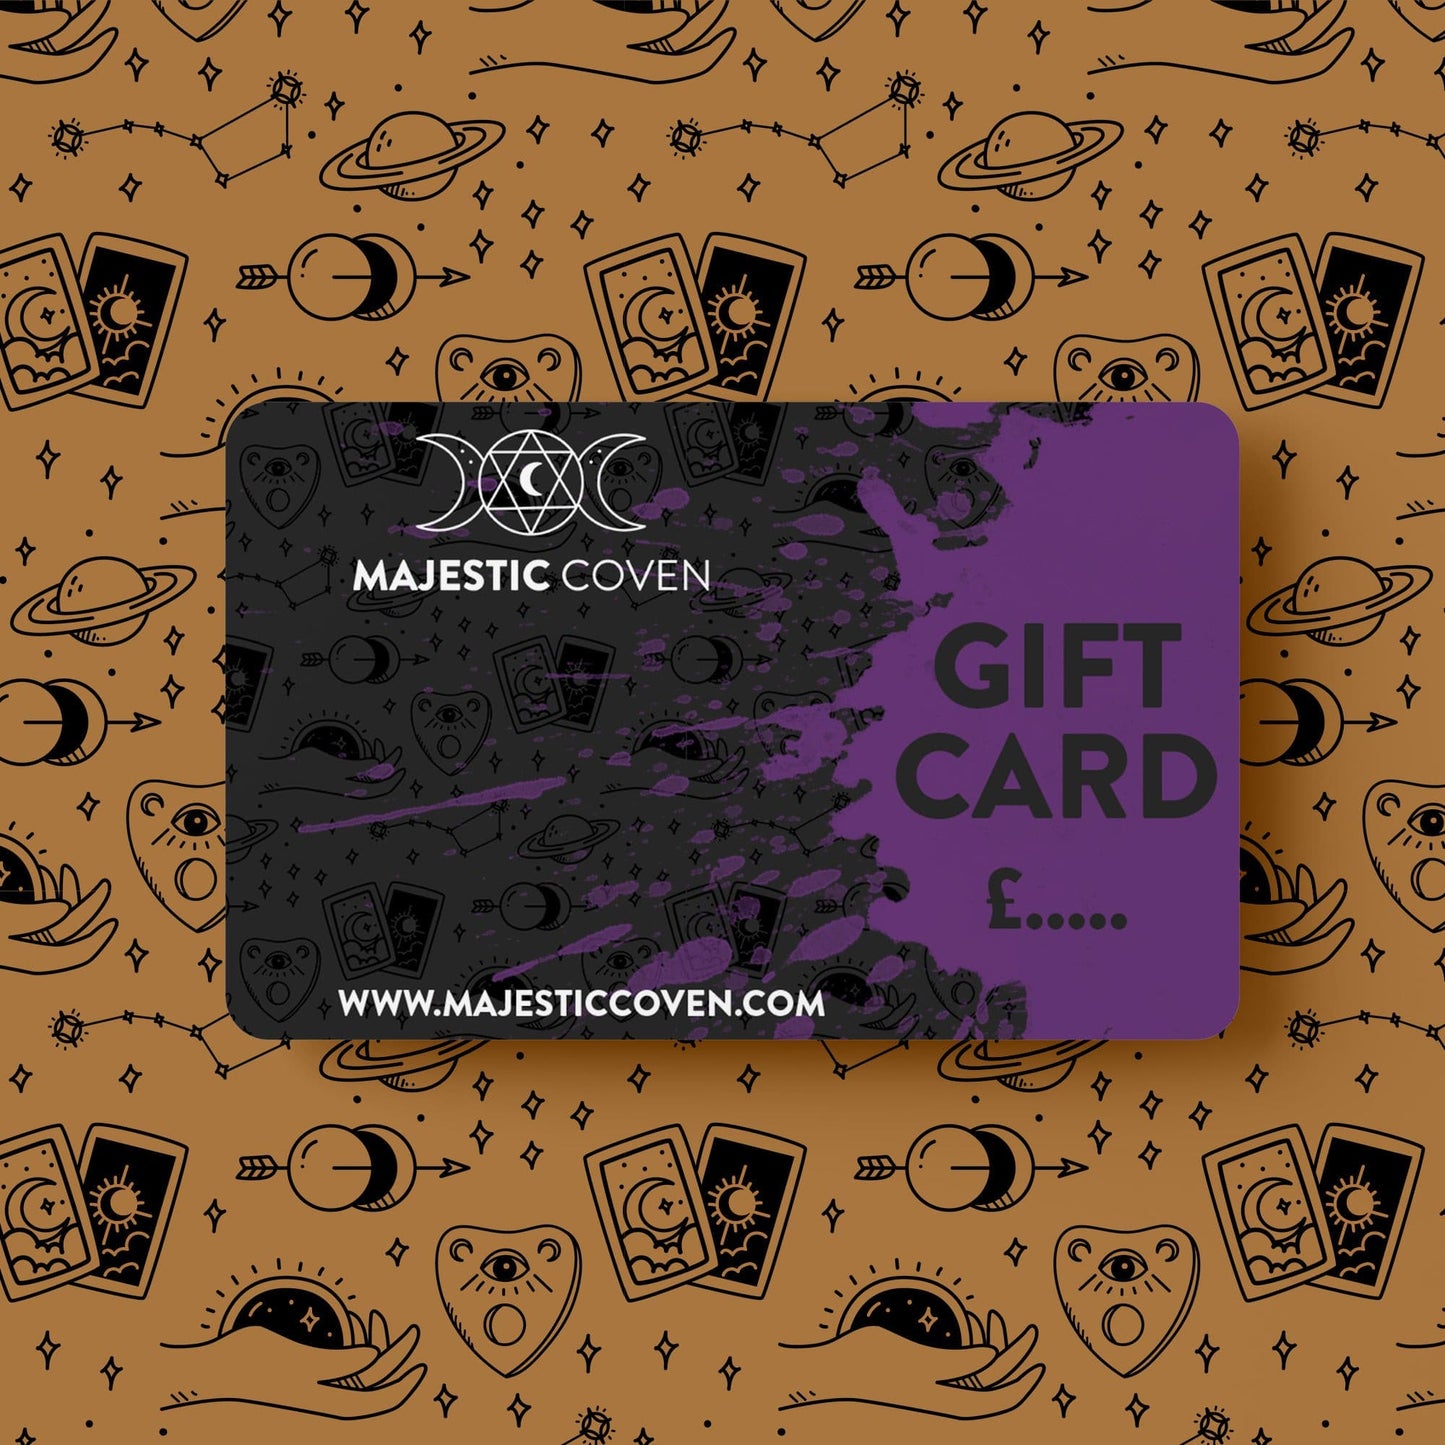 Majestic Coven - Digital Gift Card Majestic Coven